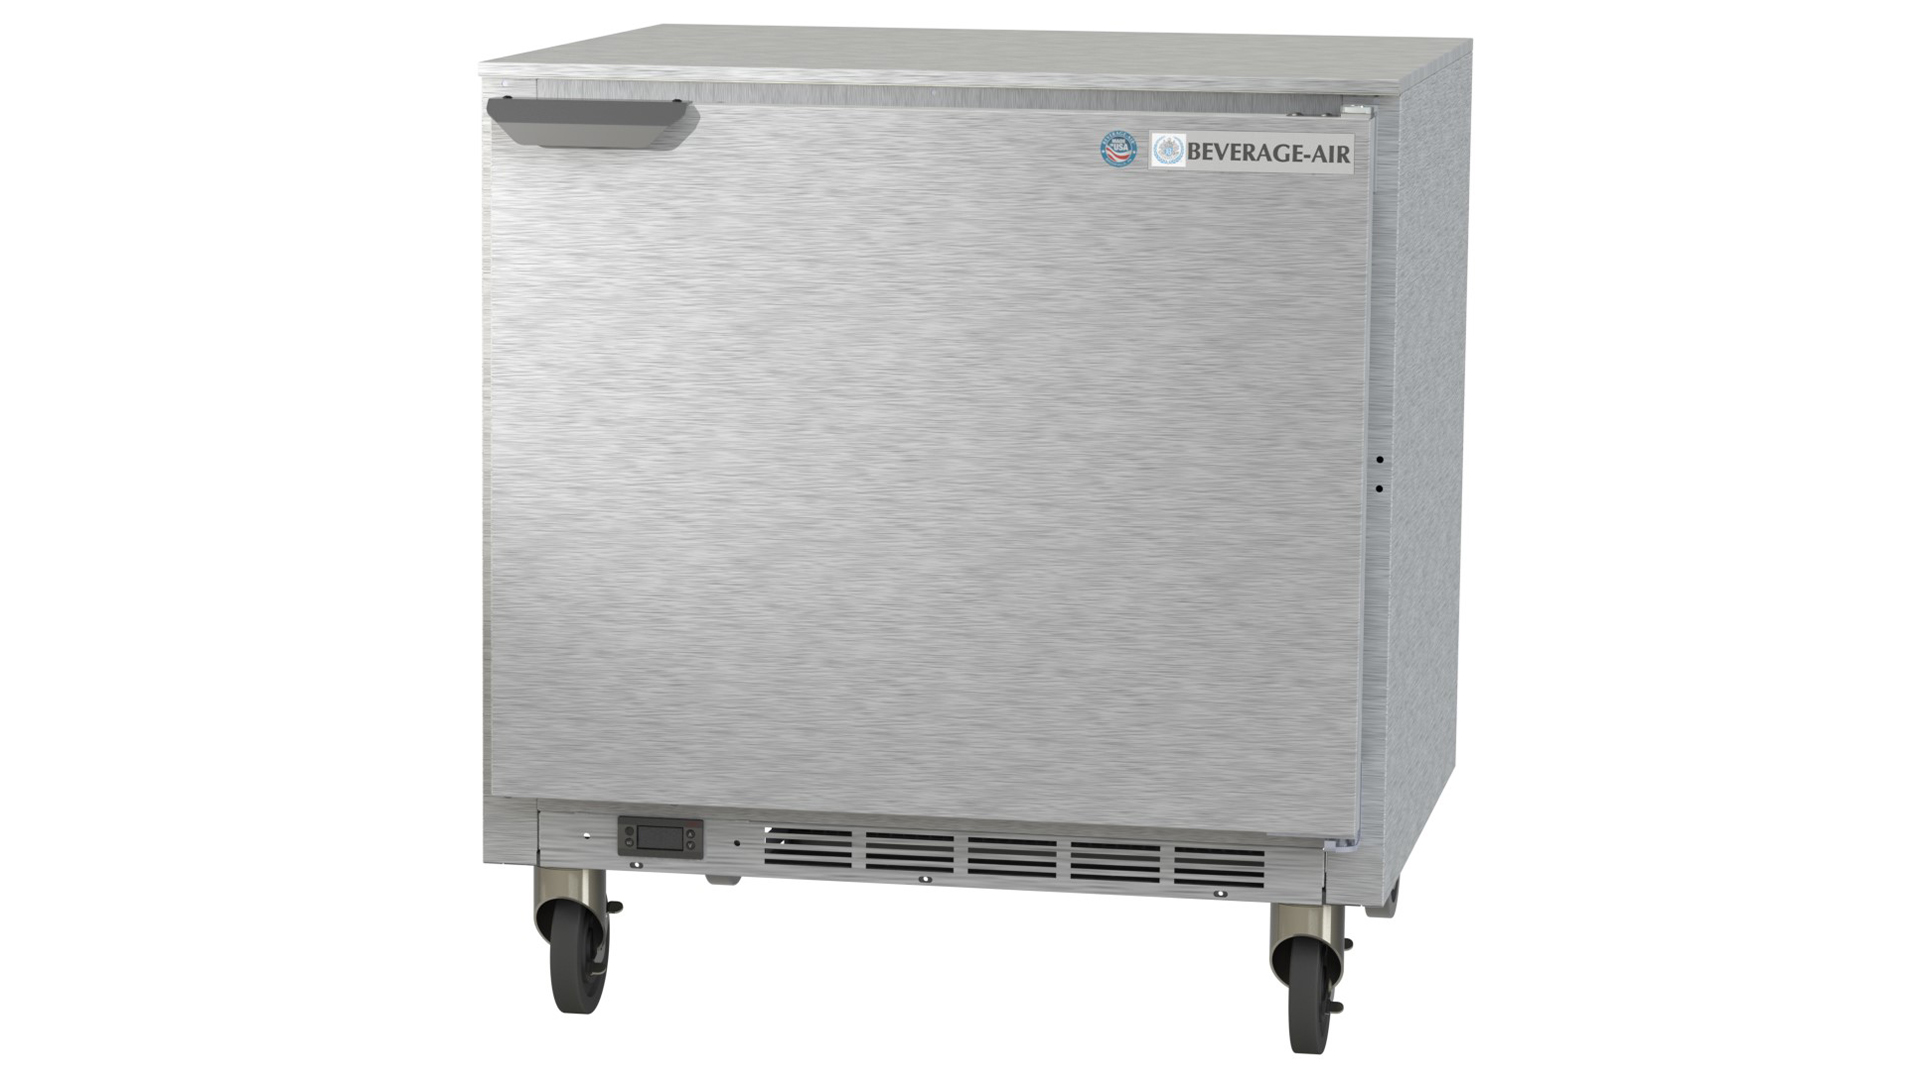 Beverage Air UCR32AHC Undercounter Refrigerator 32"